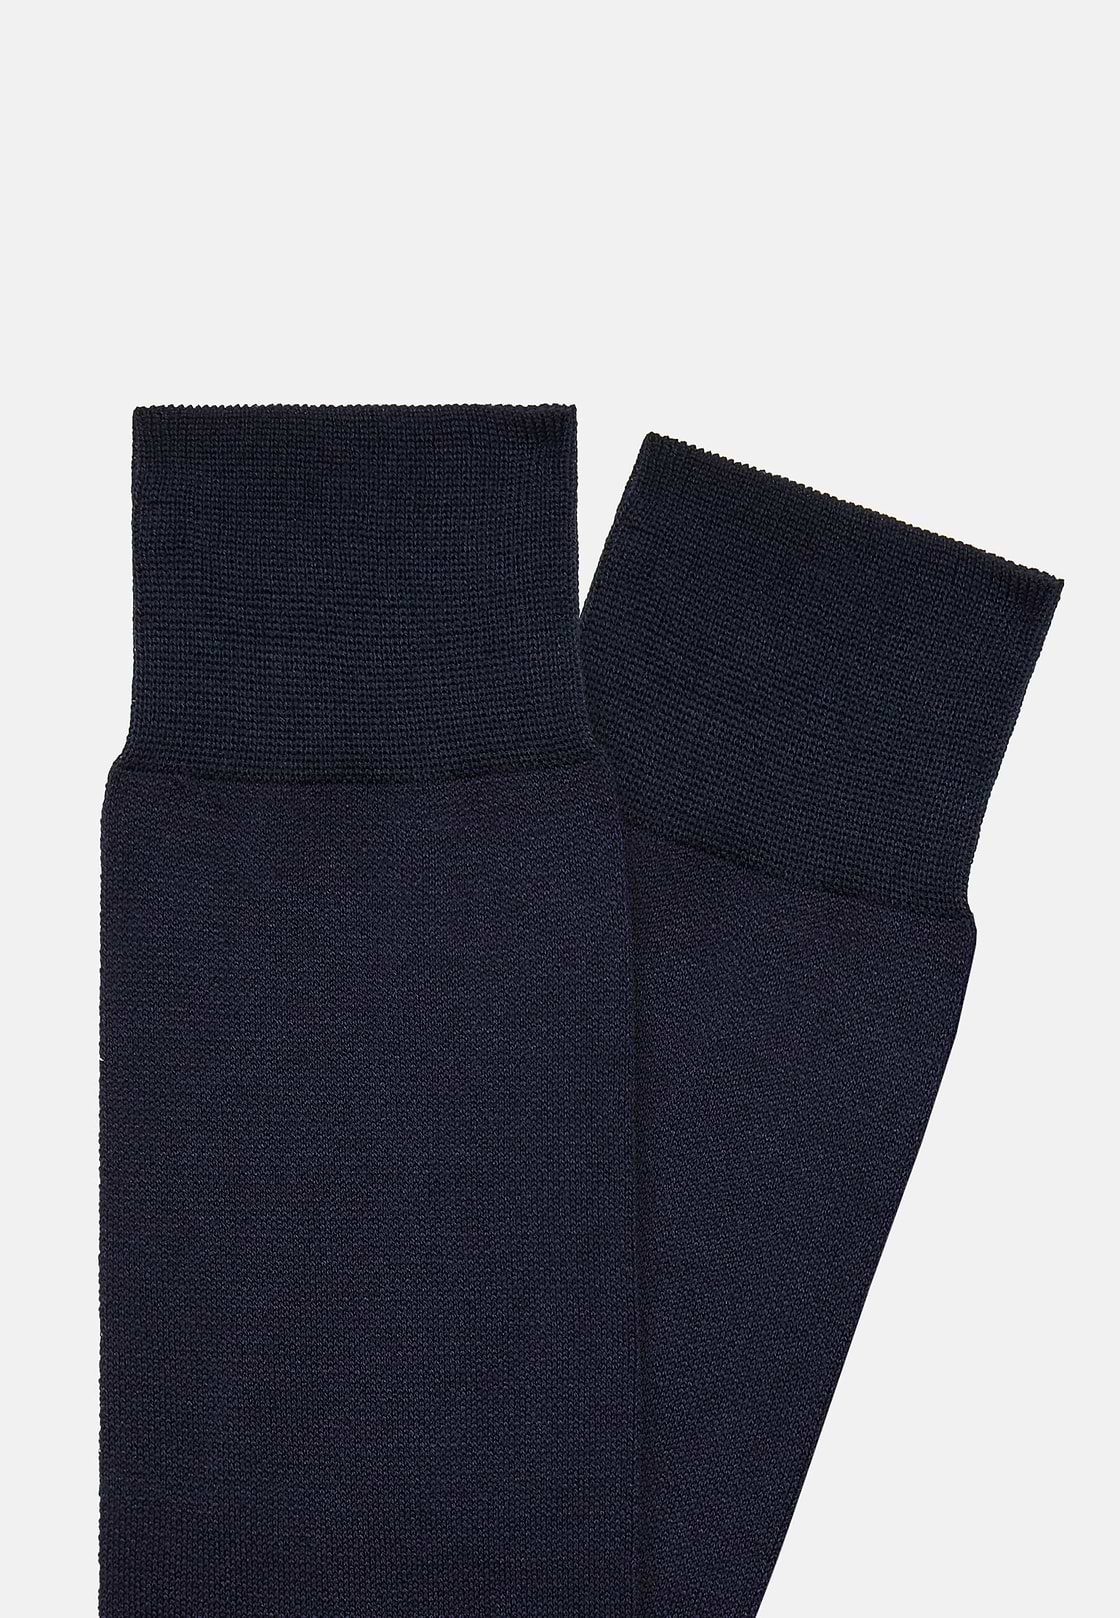 Cotton Oxford Socks, Navy blue, hi-res